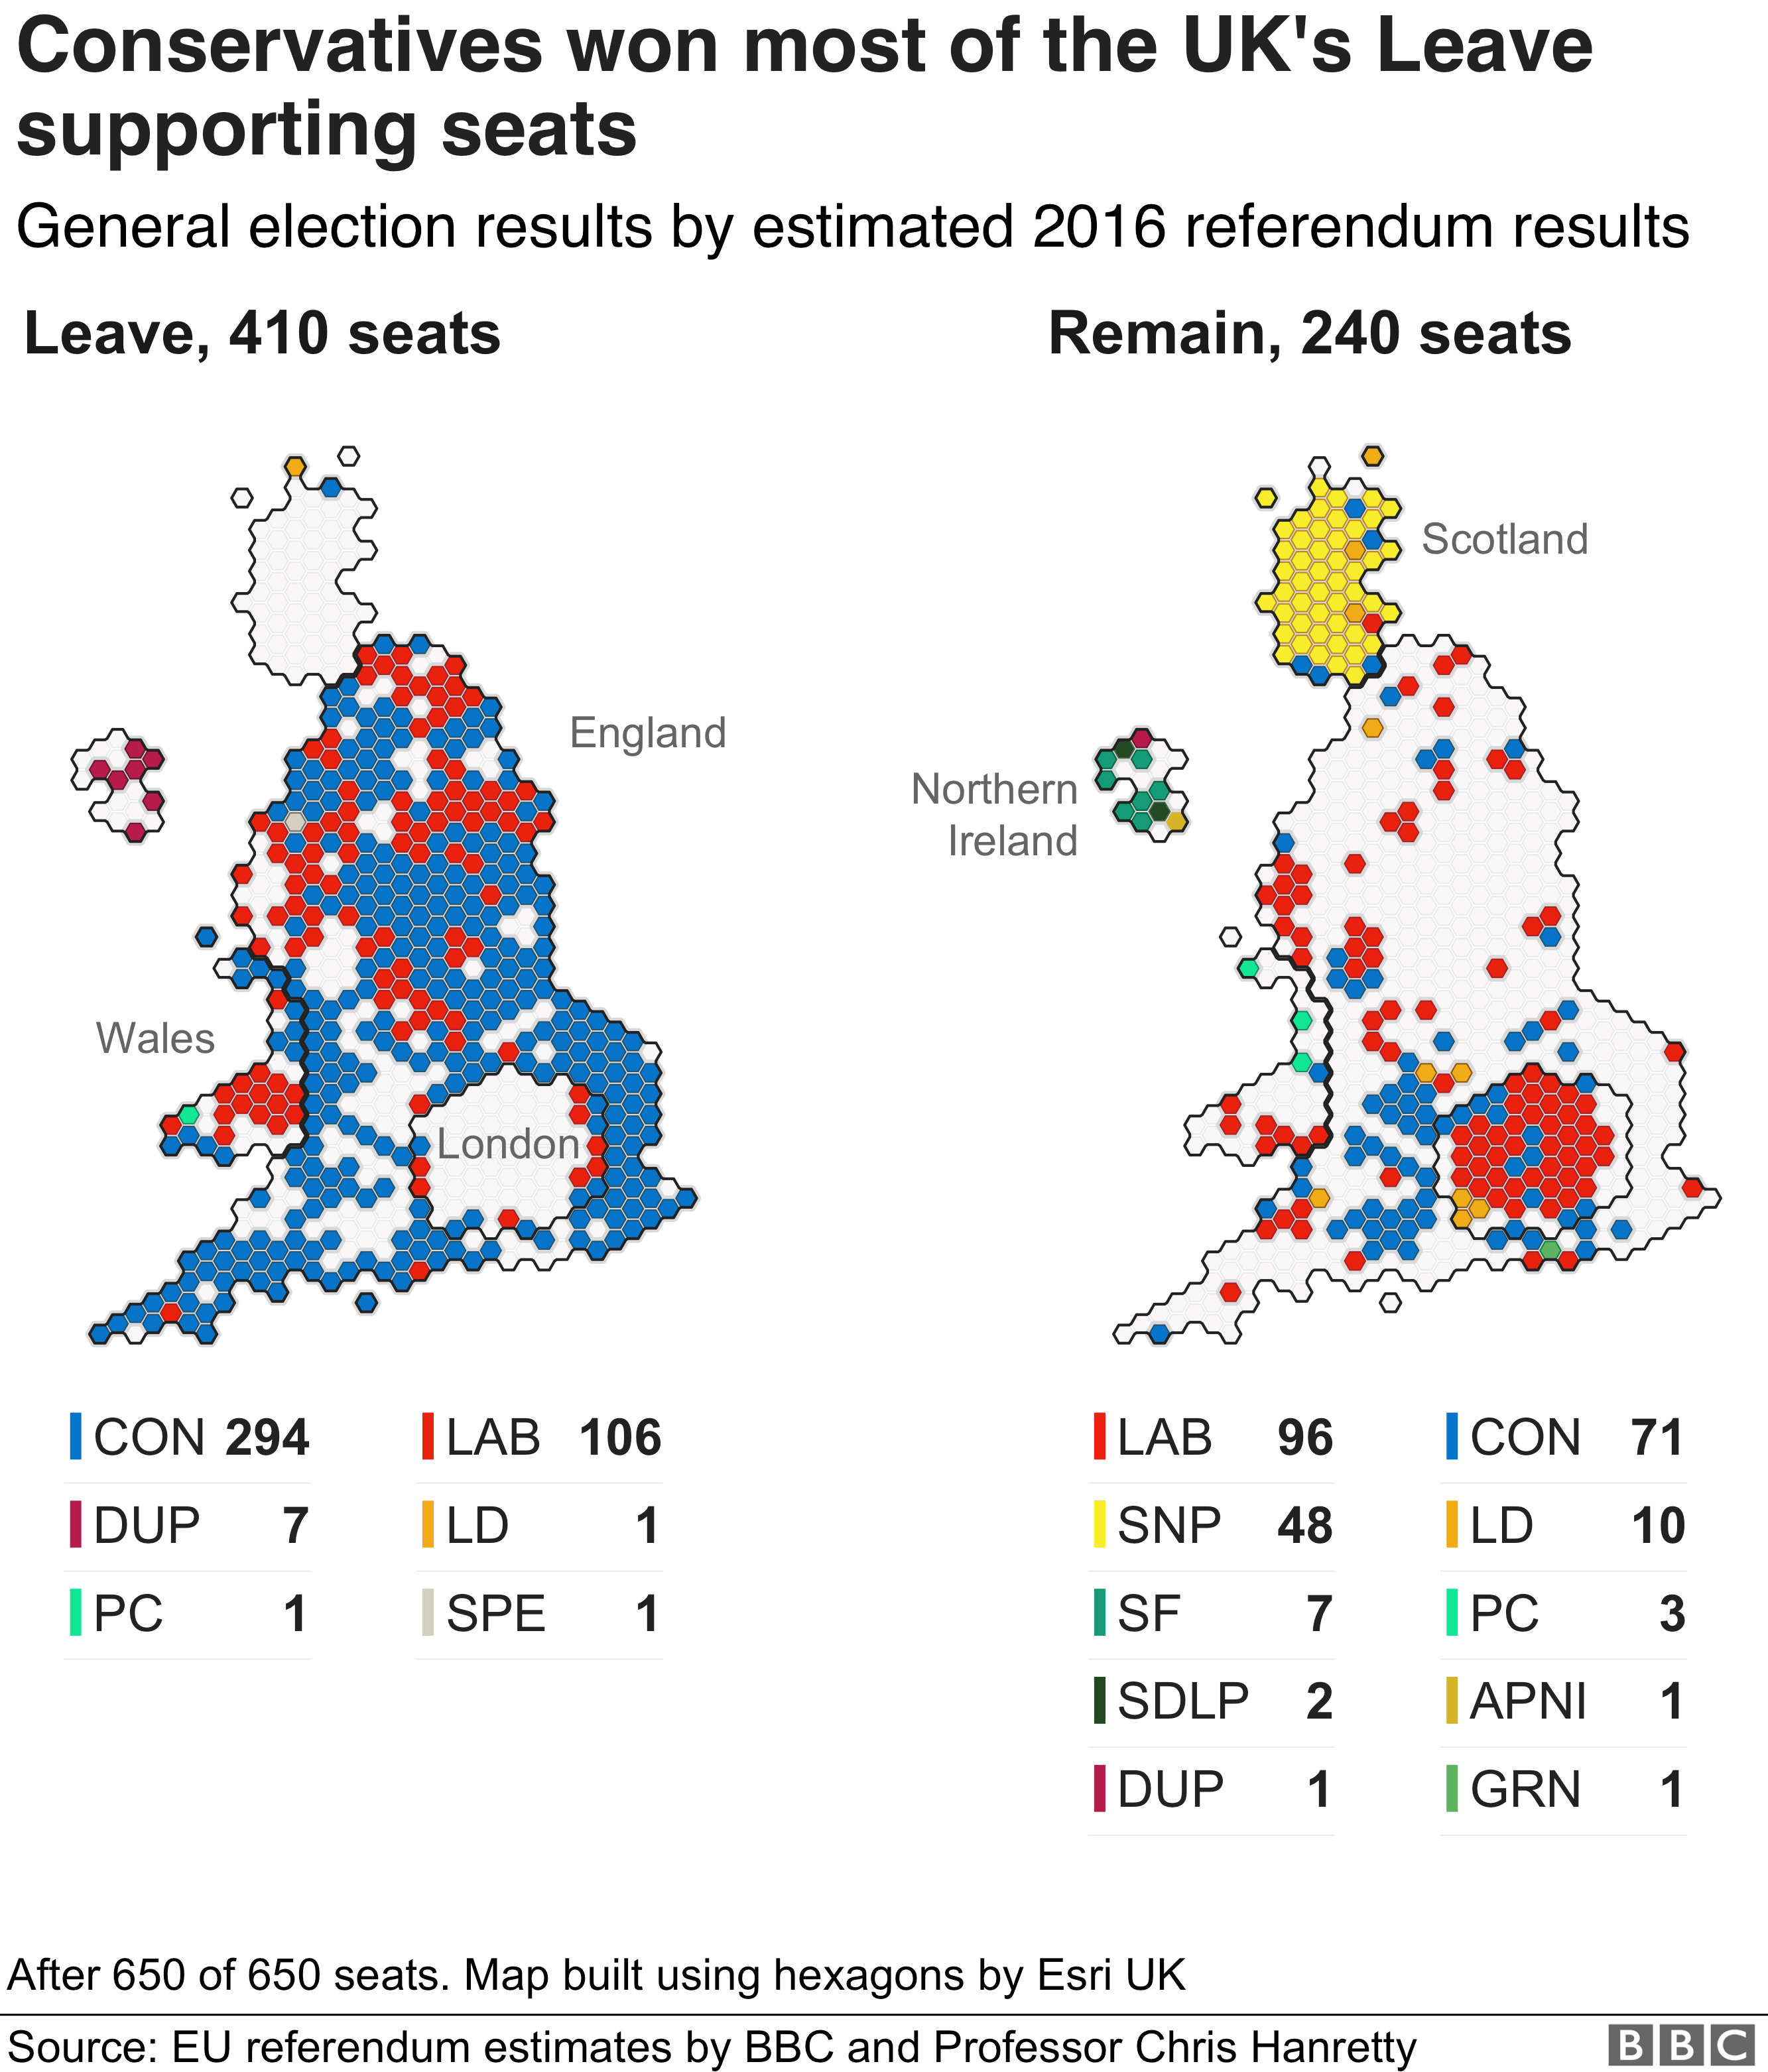 Results by 2016 referendum result